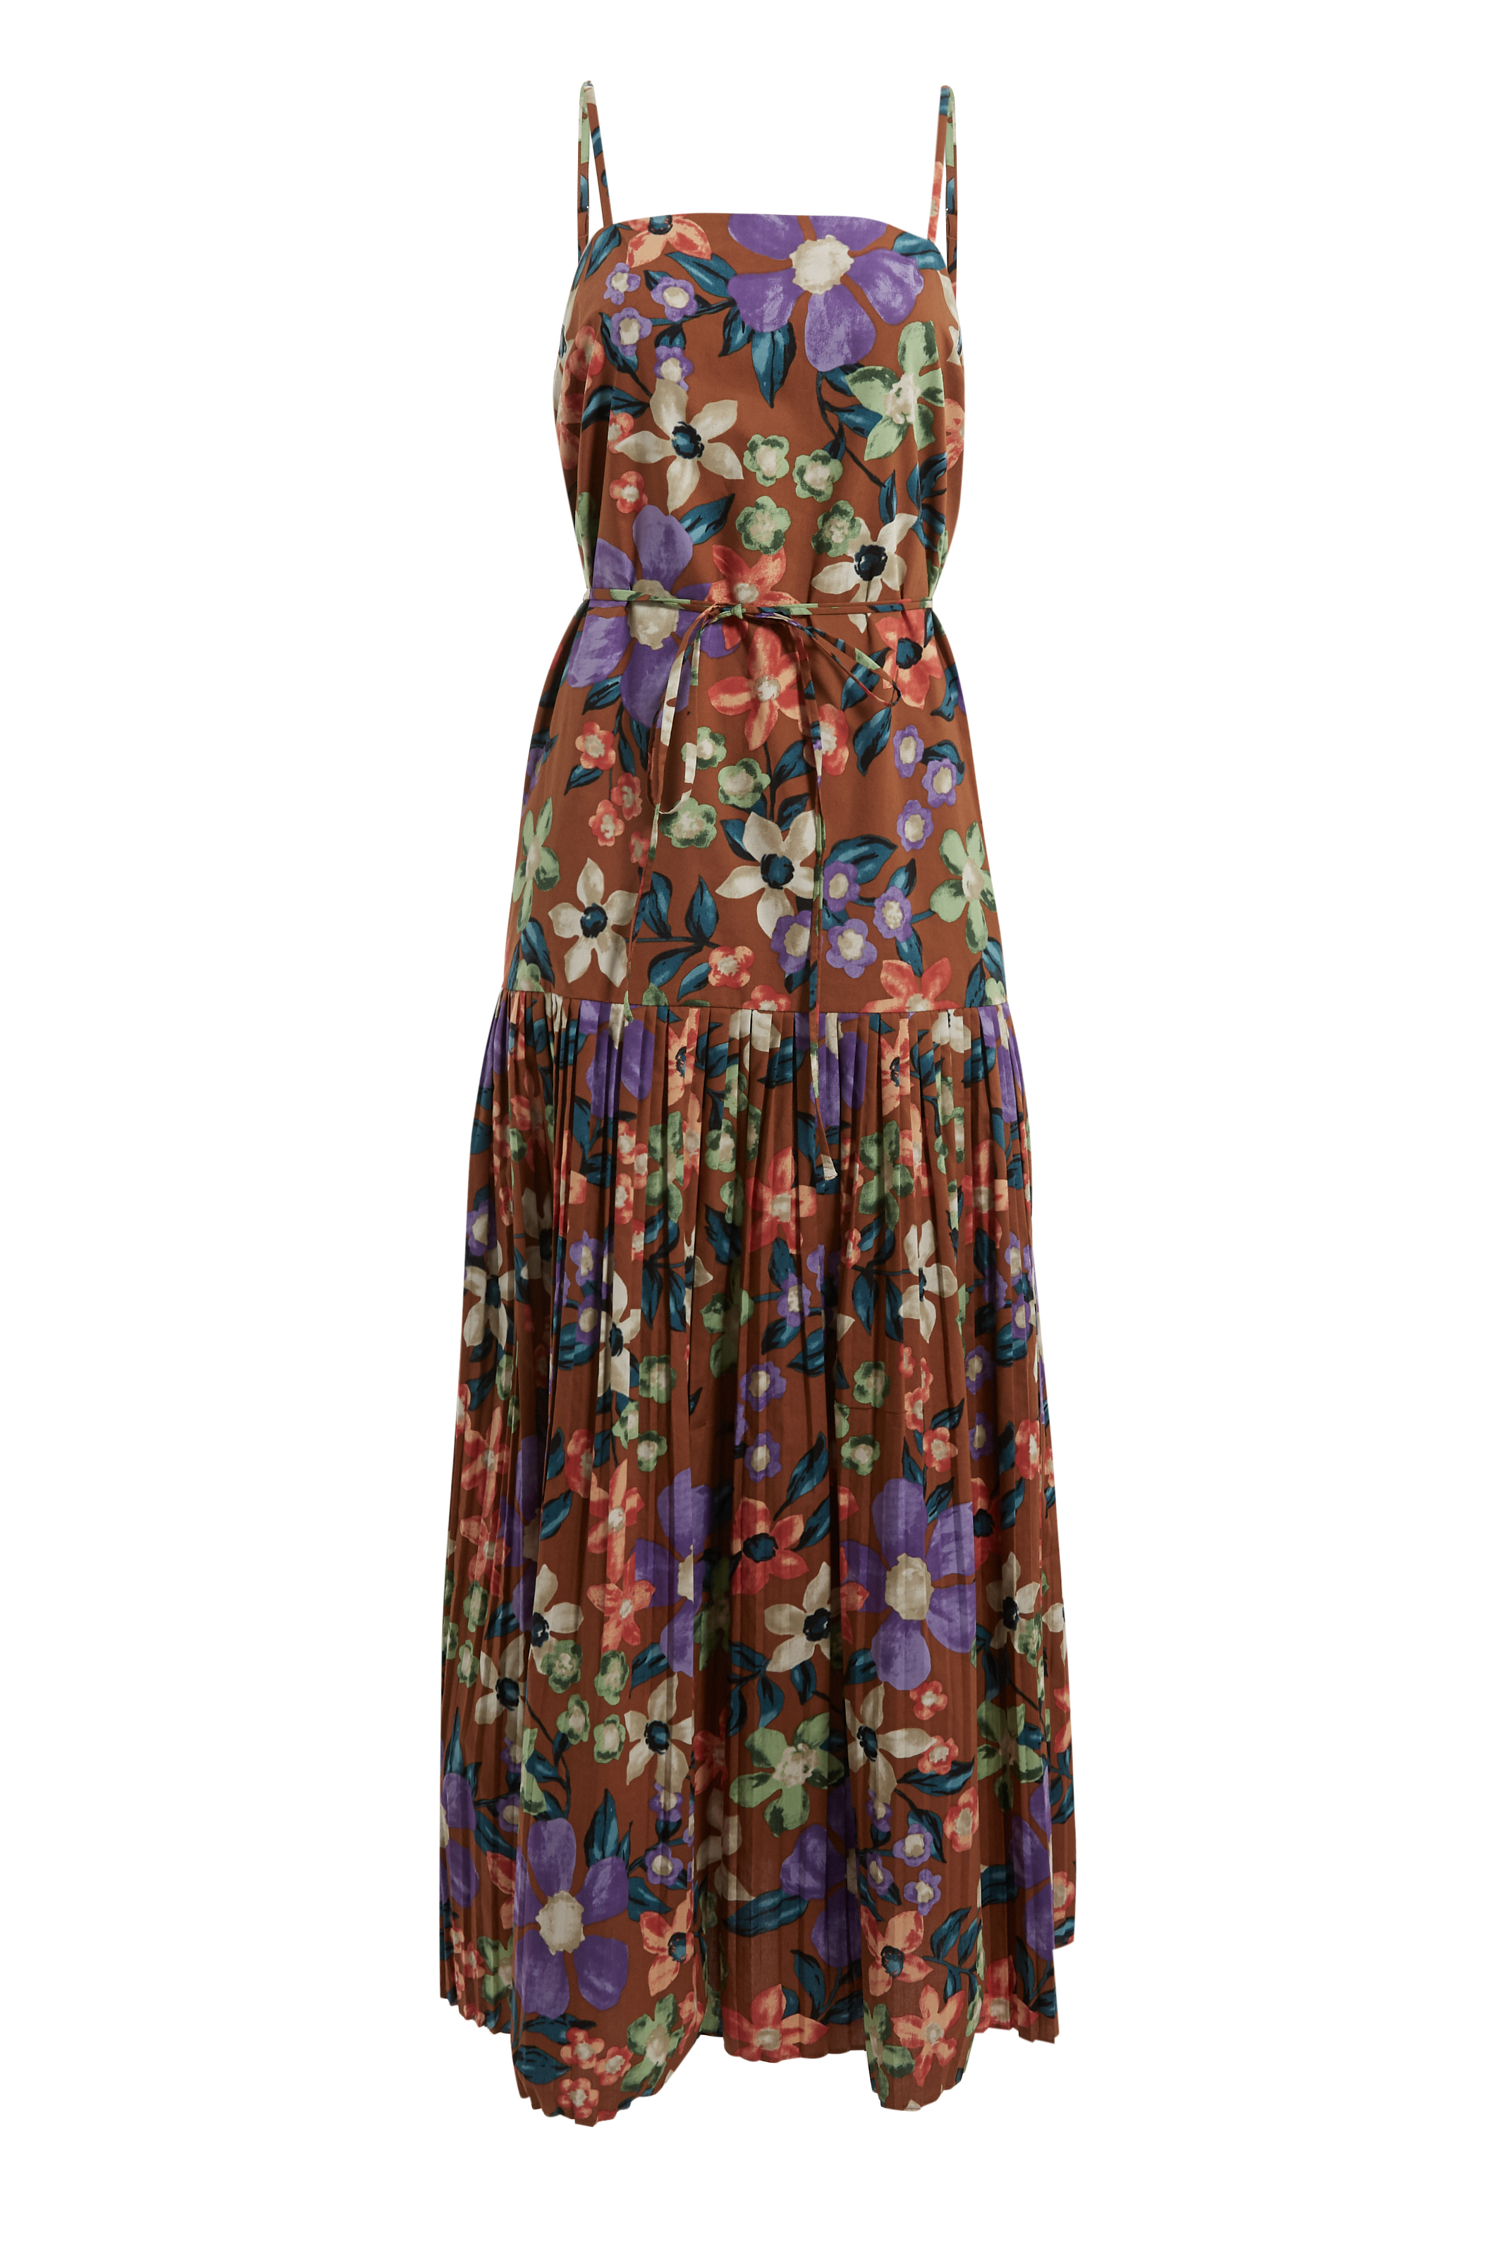 Floral Midi Dress in Rust Multi XS - M | DAILYLOOK